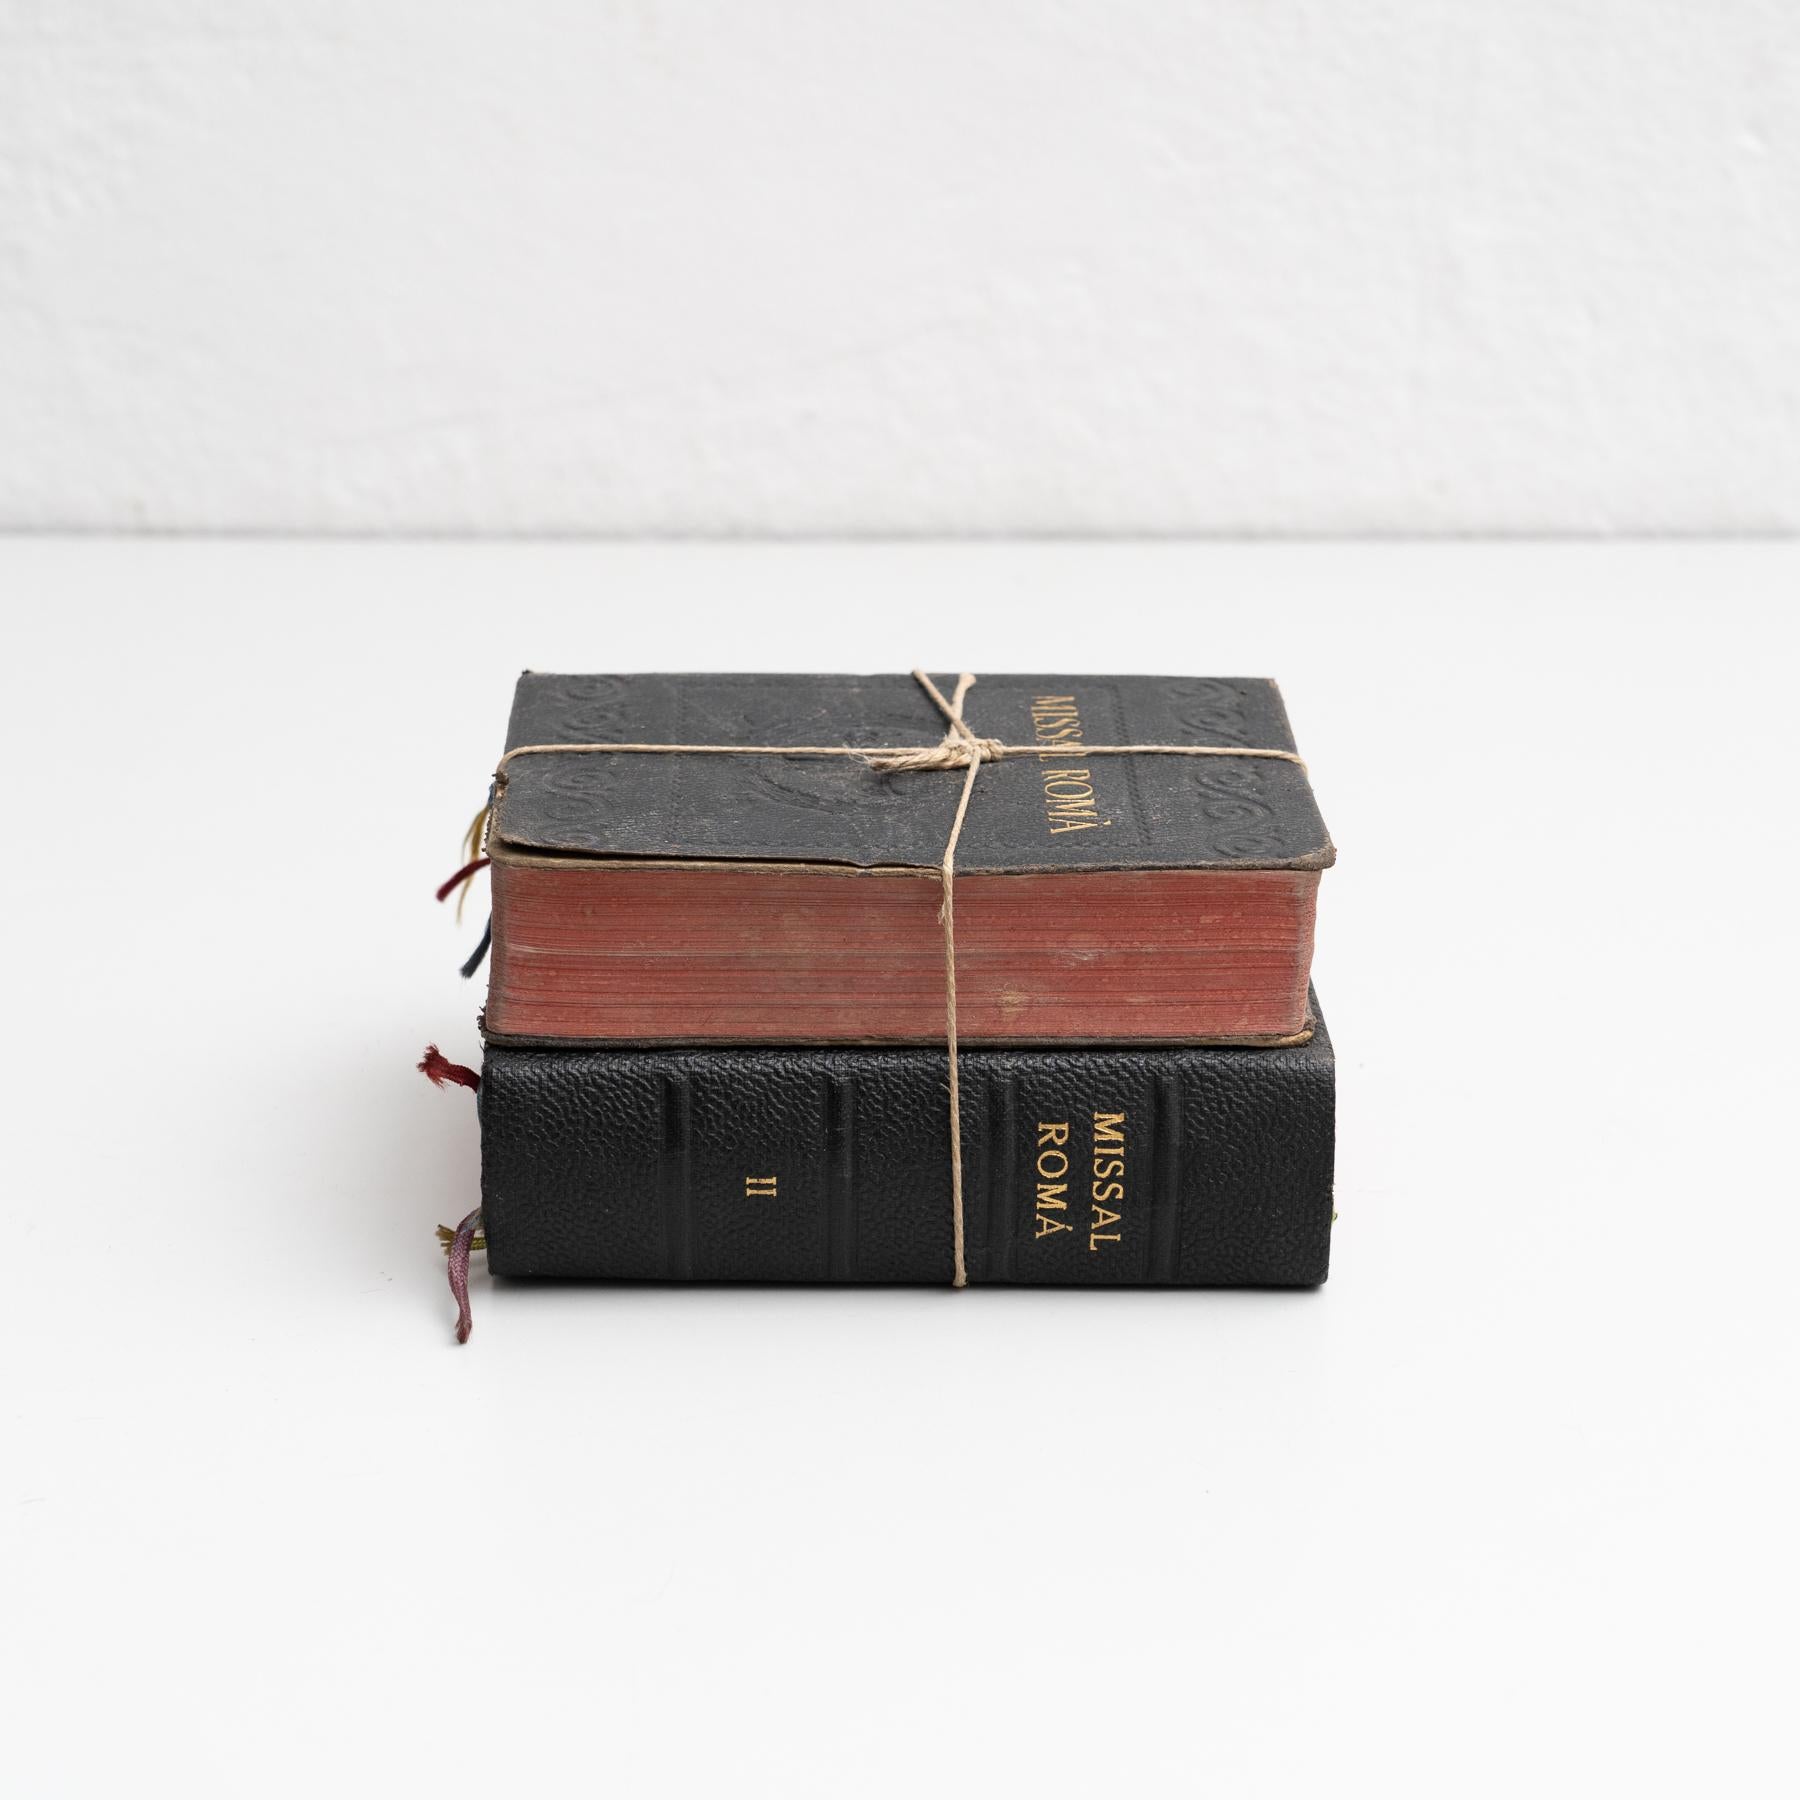 Antique Religious Book Sculptural Artwork, circa 1950 In Good Condition For Sale In Barcelona, Barcelona